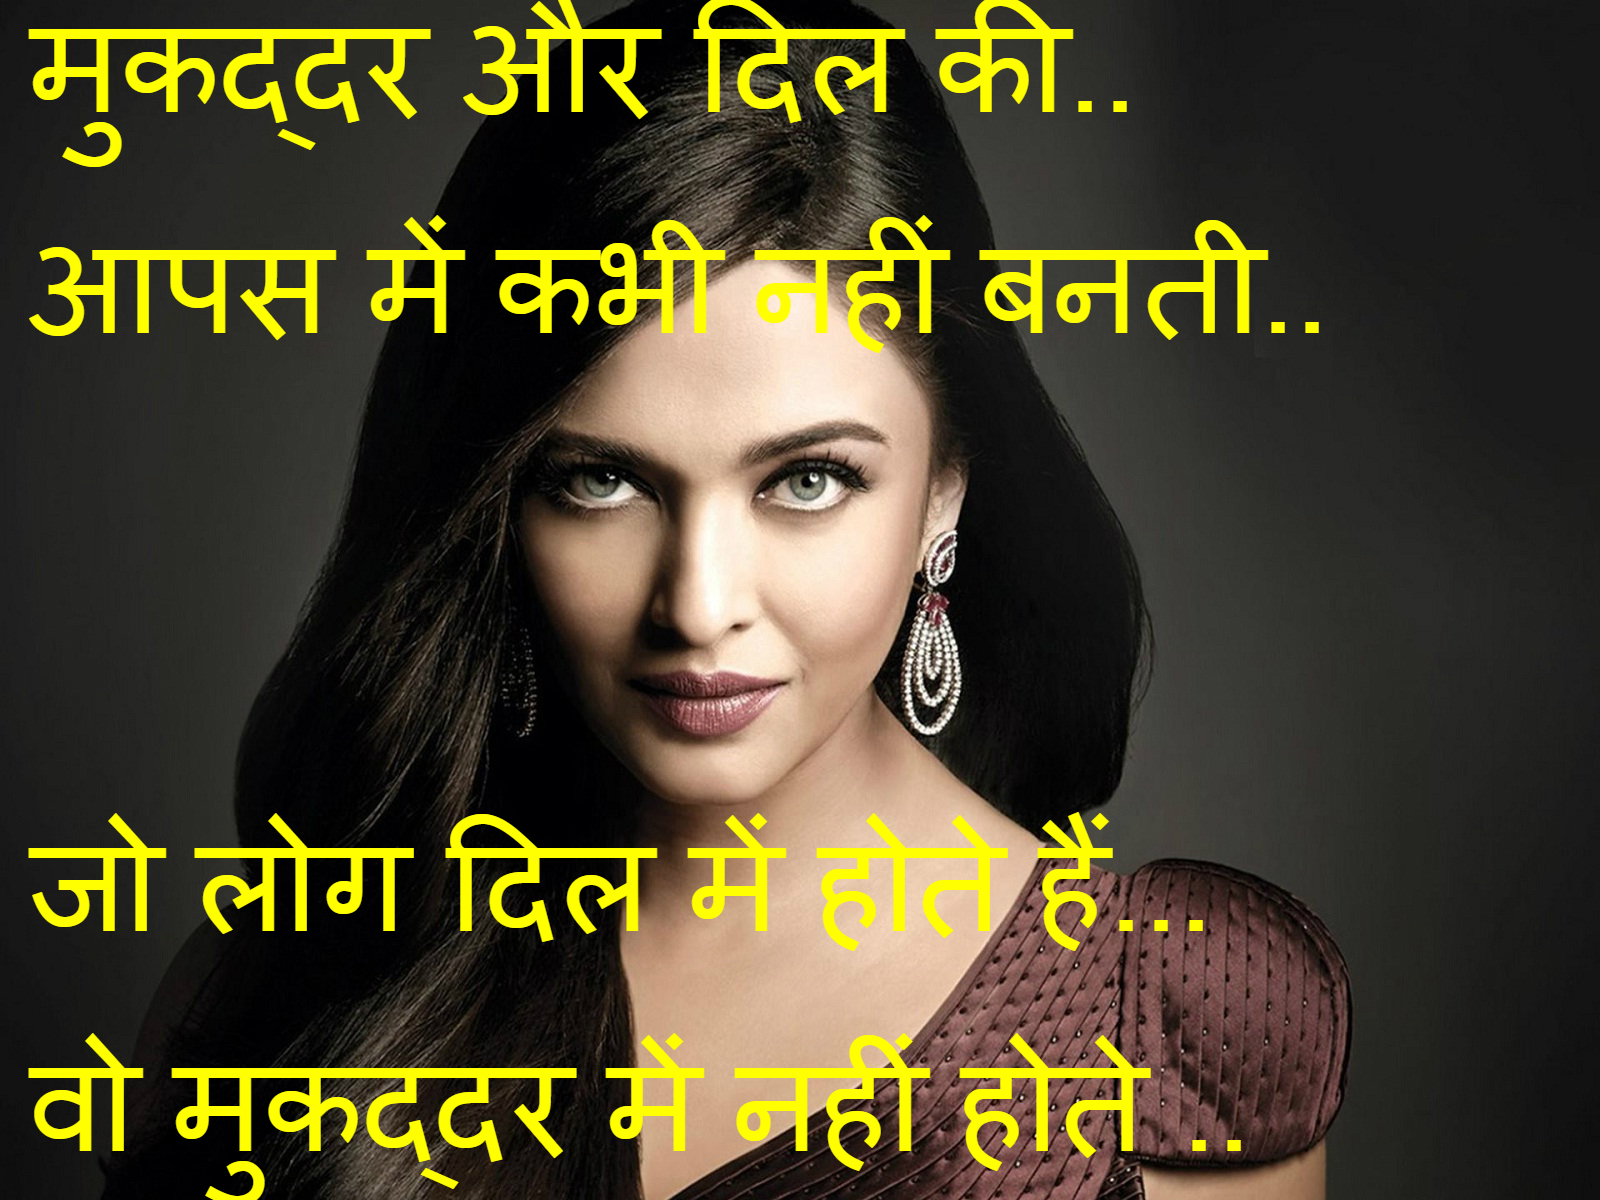 shayari urdu image: Best image shayari for love